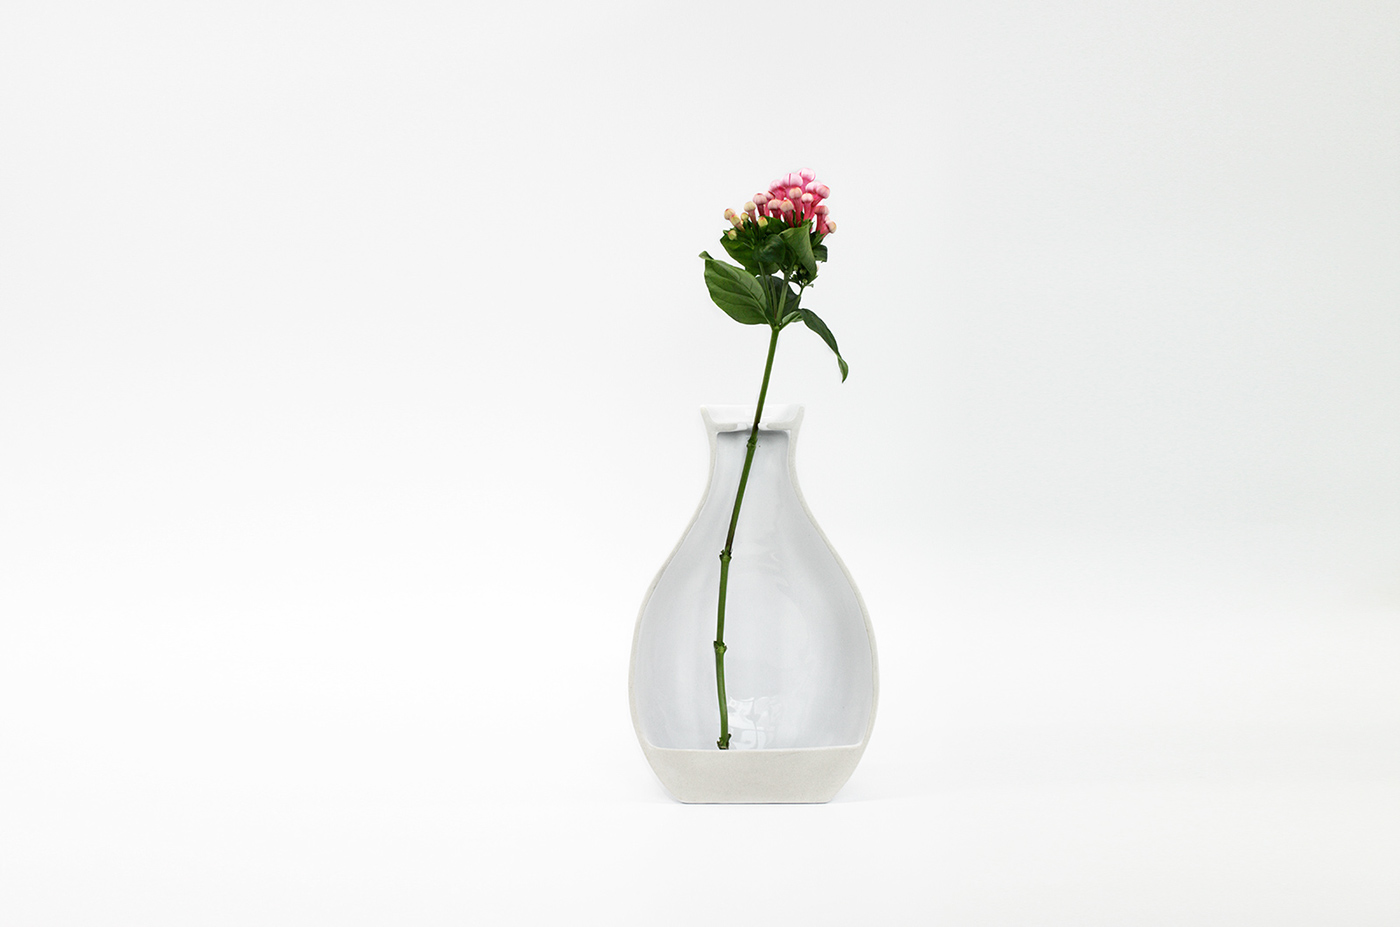 Vase everyday object design art